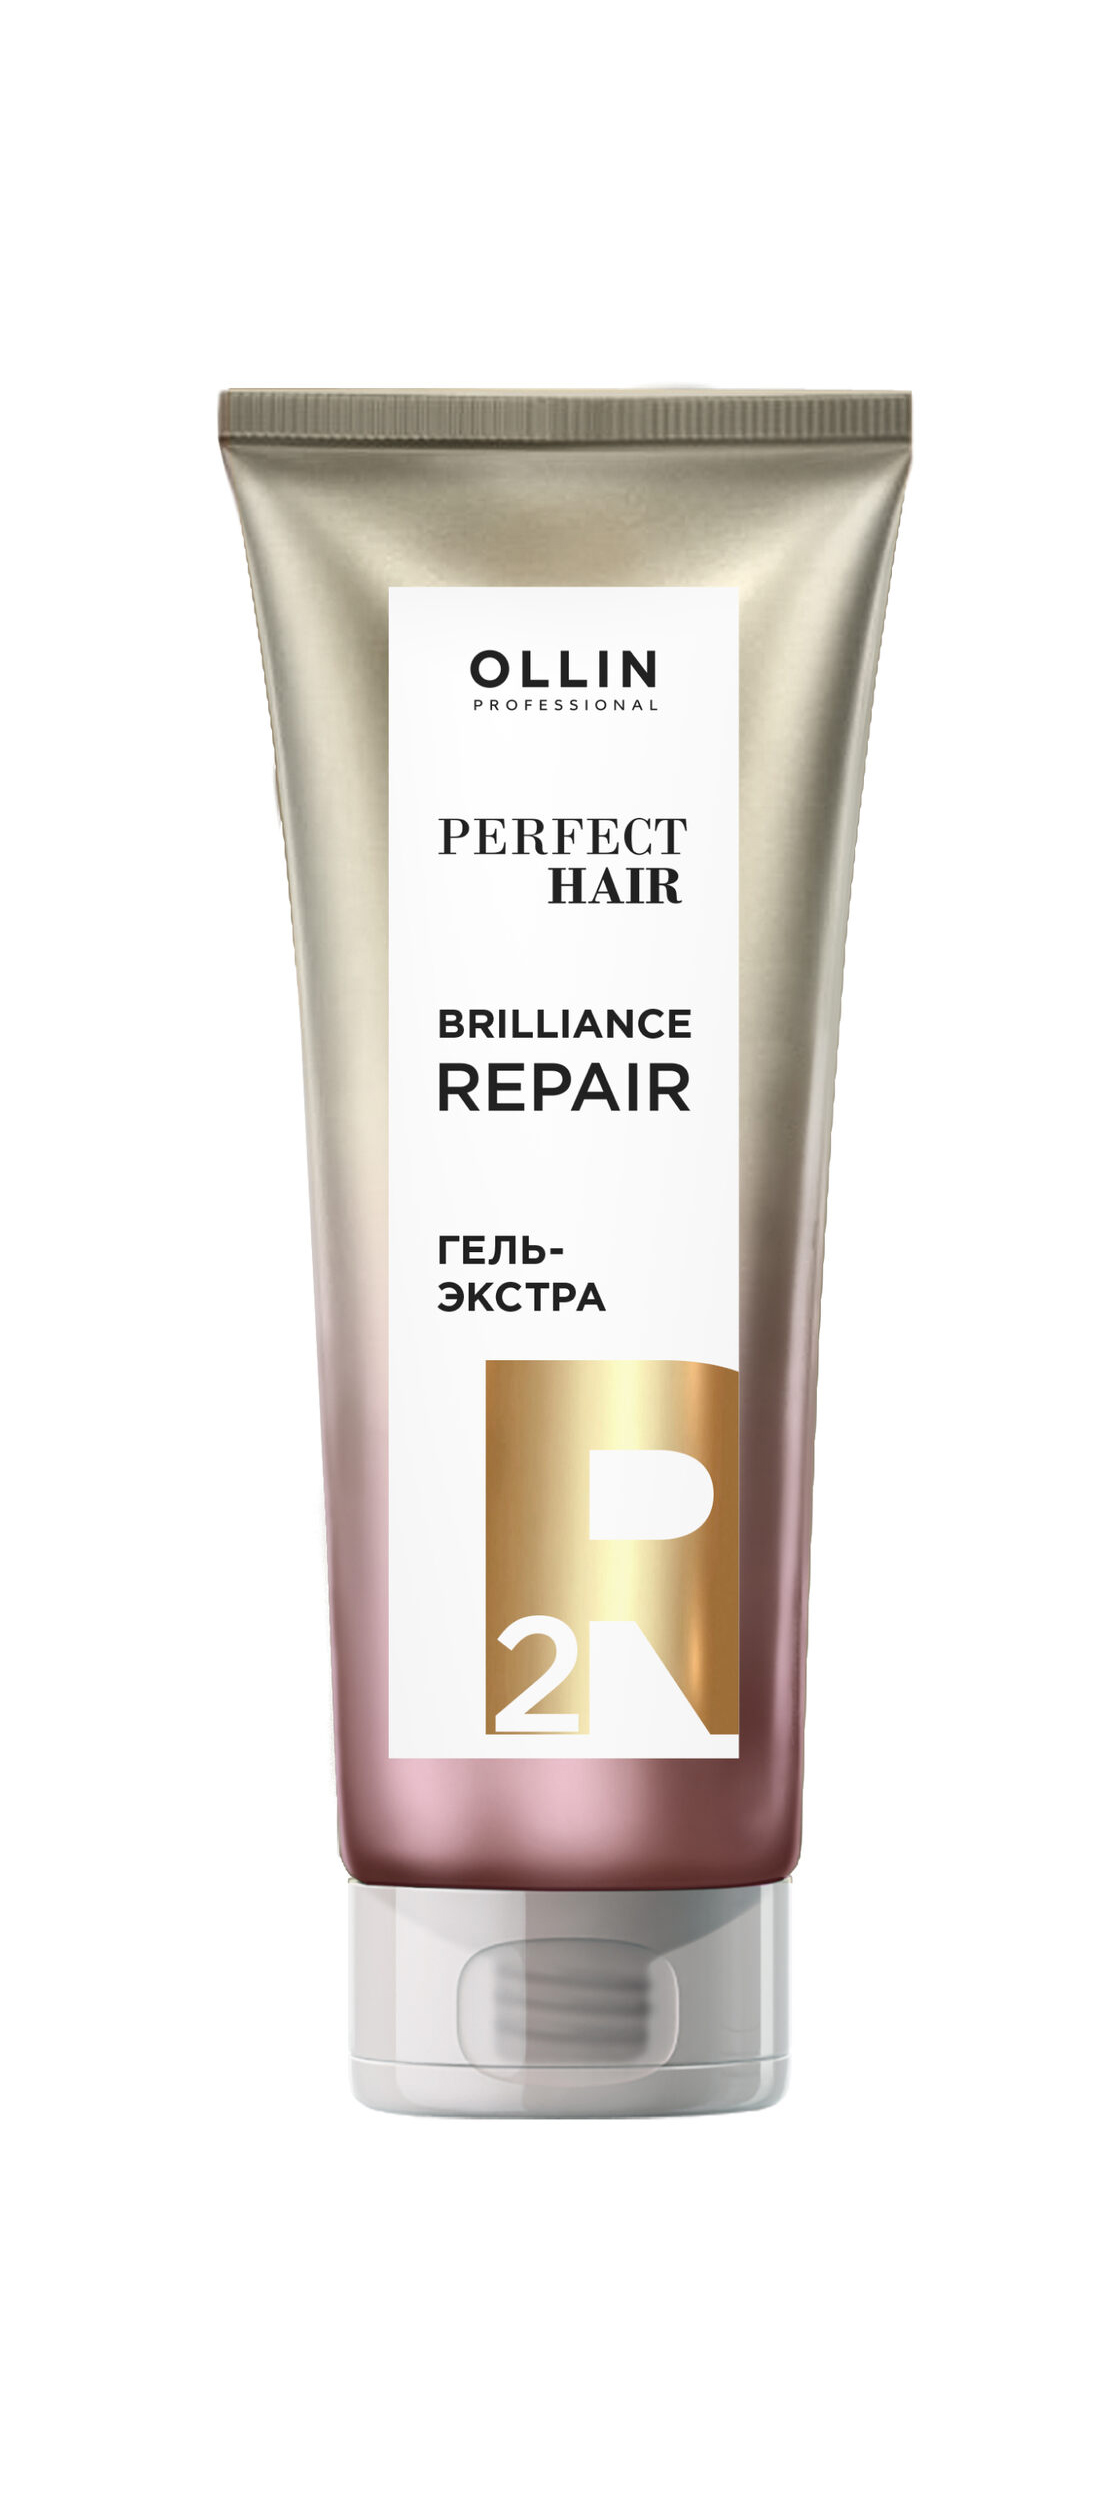 OLLIN PERFECT HAIR BRILLIANCE REPAIR 2 Гель-экстра. Насыщающий этап 250мл